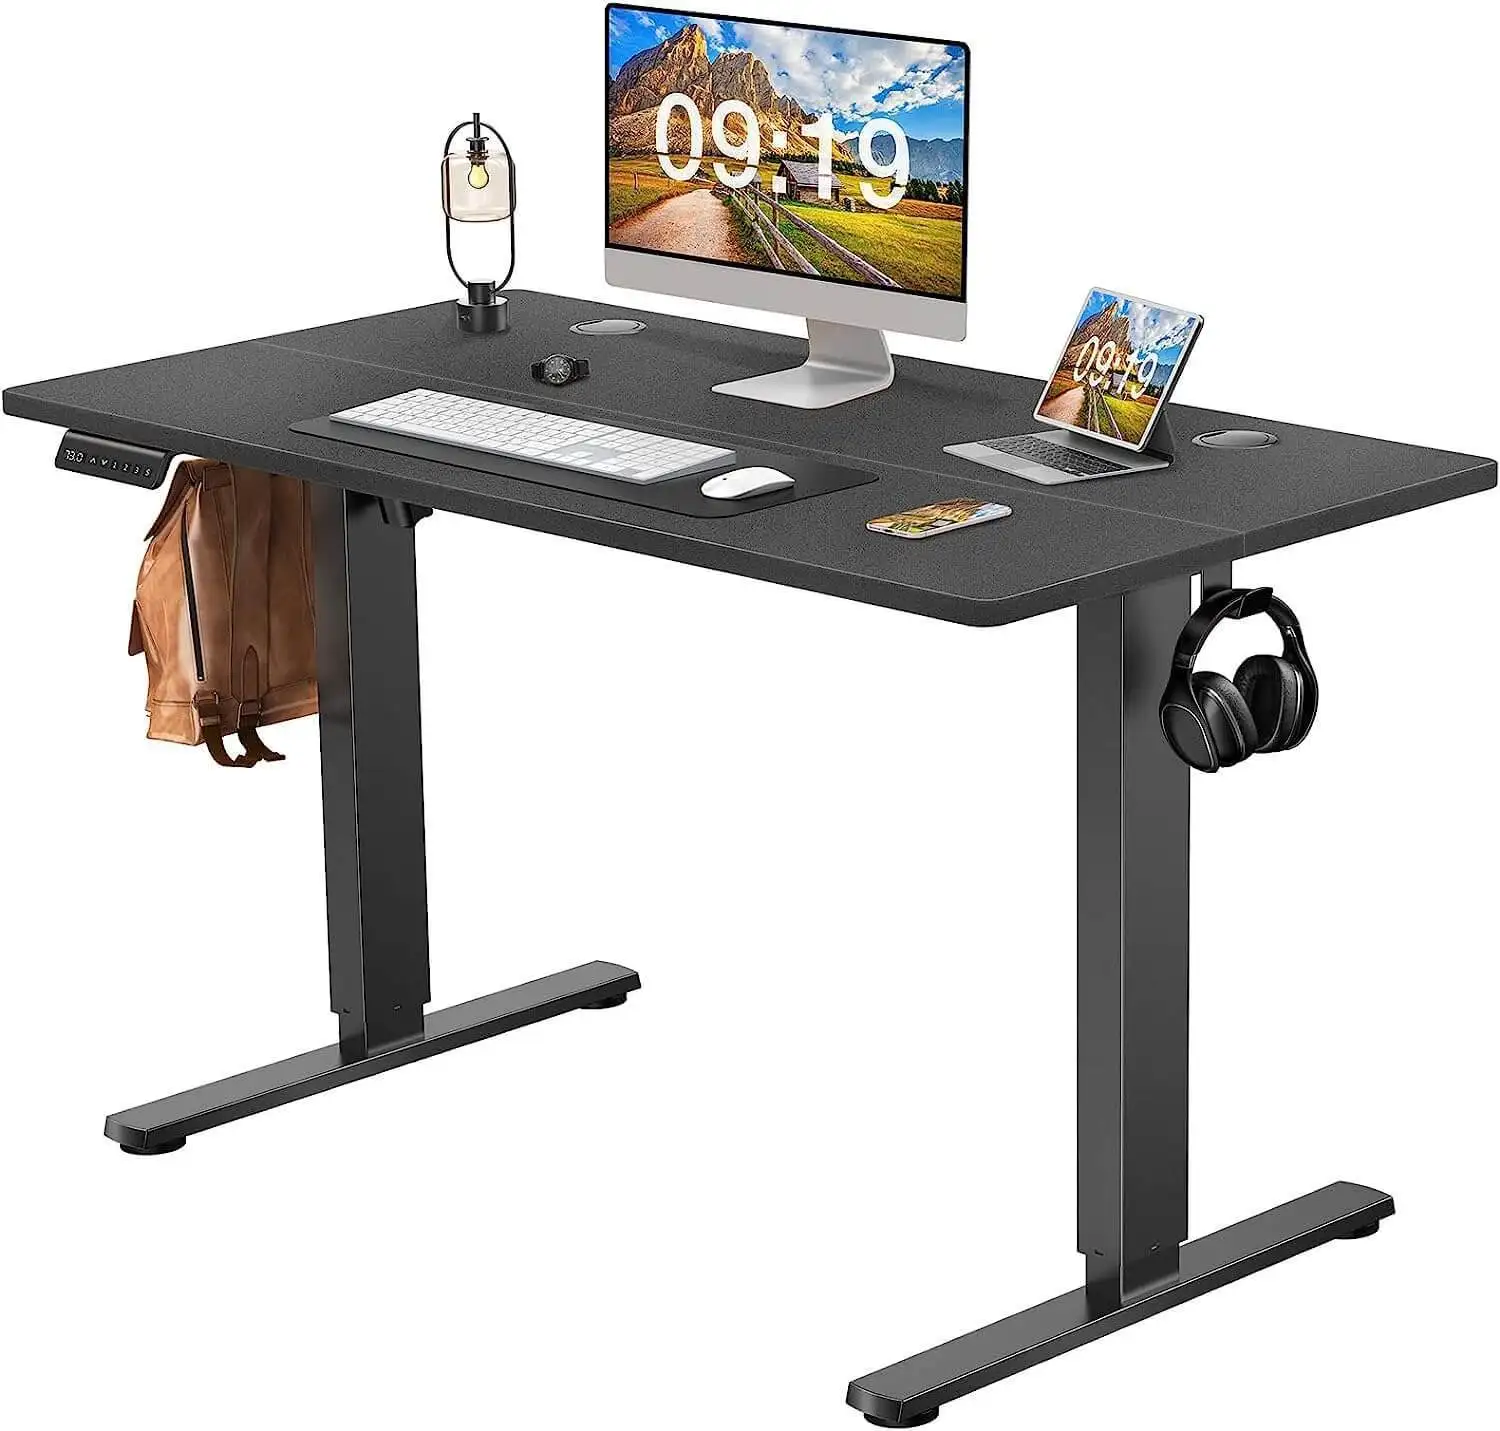 

Electric Height Adjustable Standing Desk,Sit to Stand Ergonomic Computer Desk,Black,48'' x 24" desk